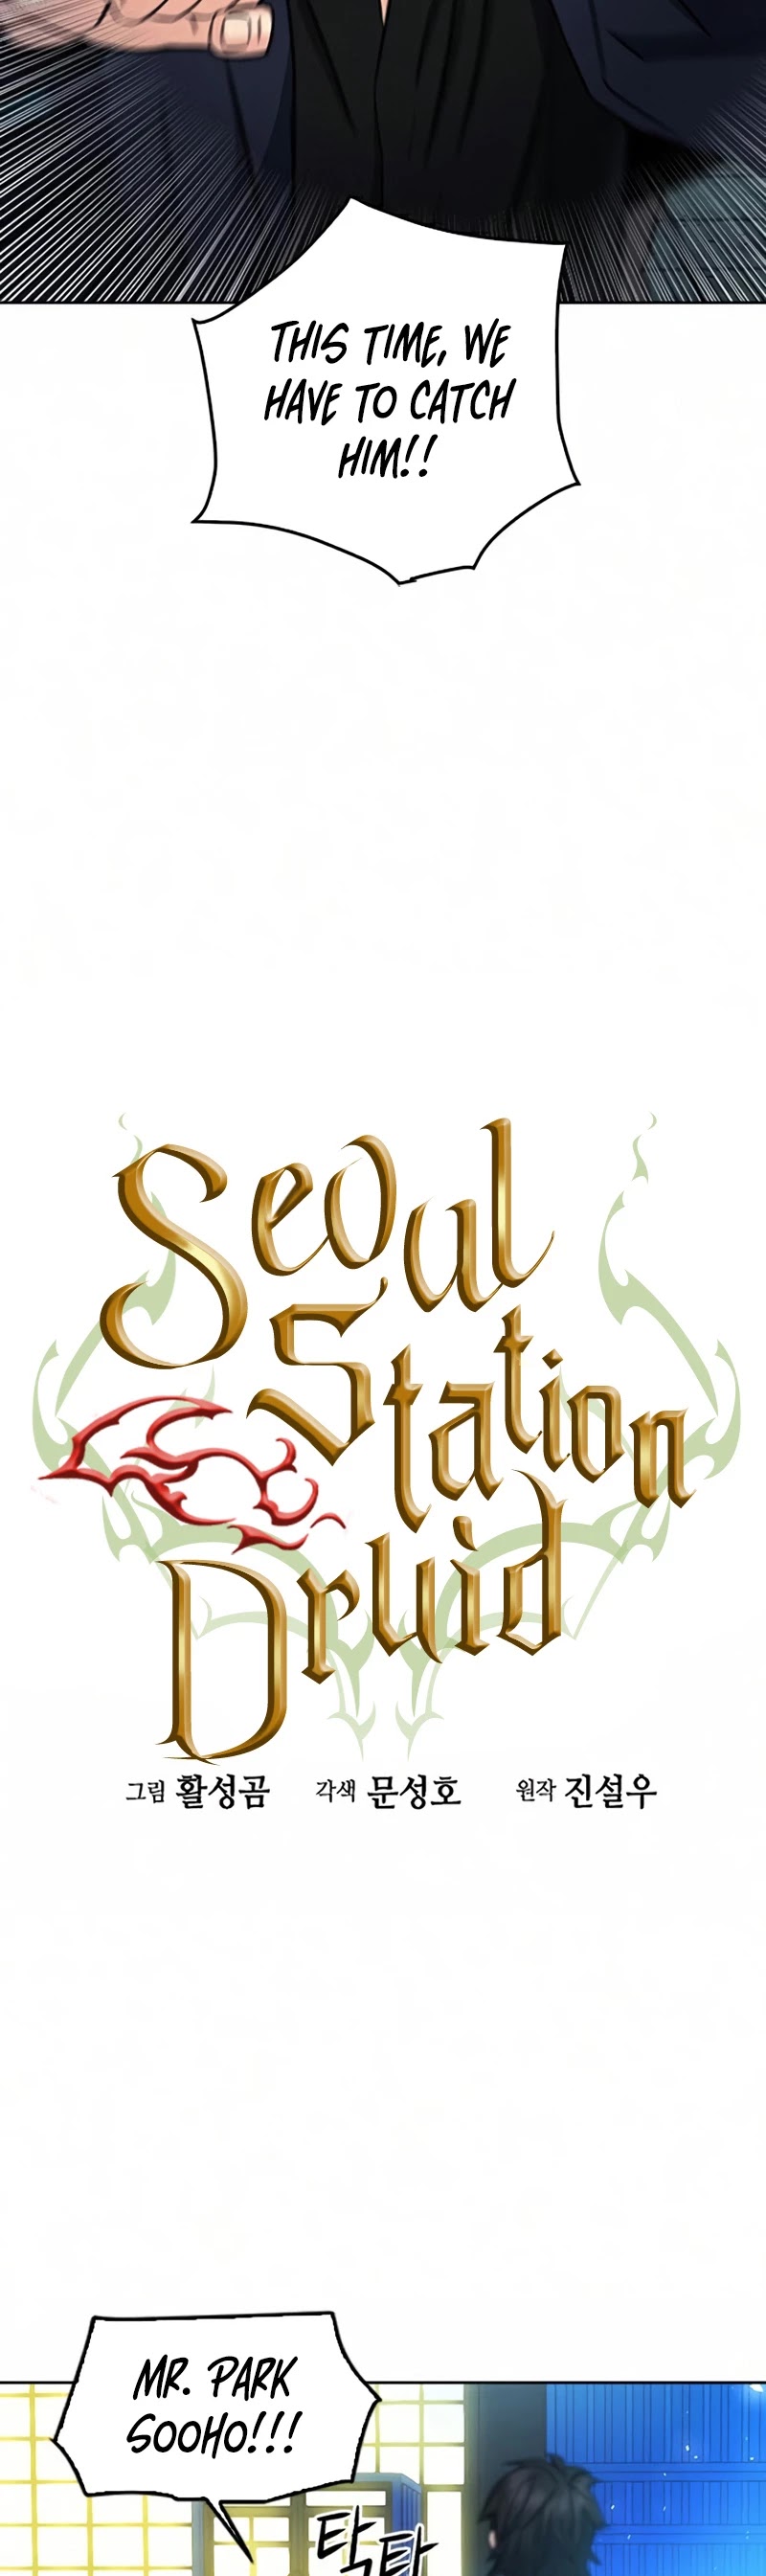 Seoul Station Druid Chapter 51